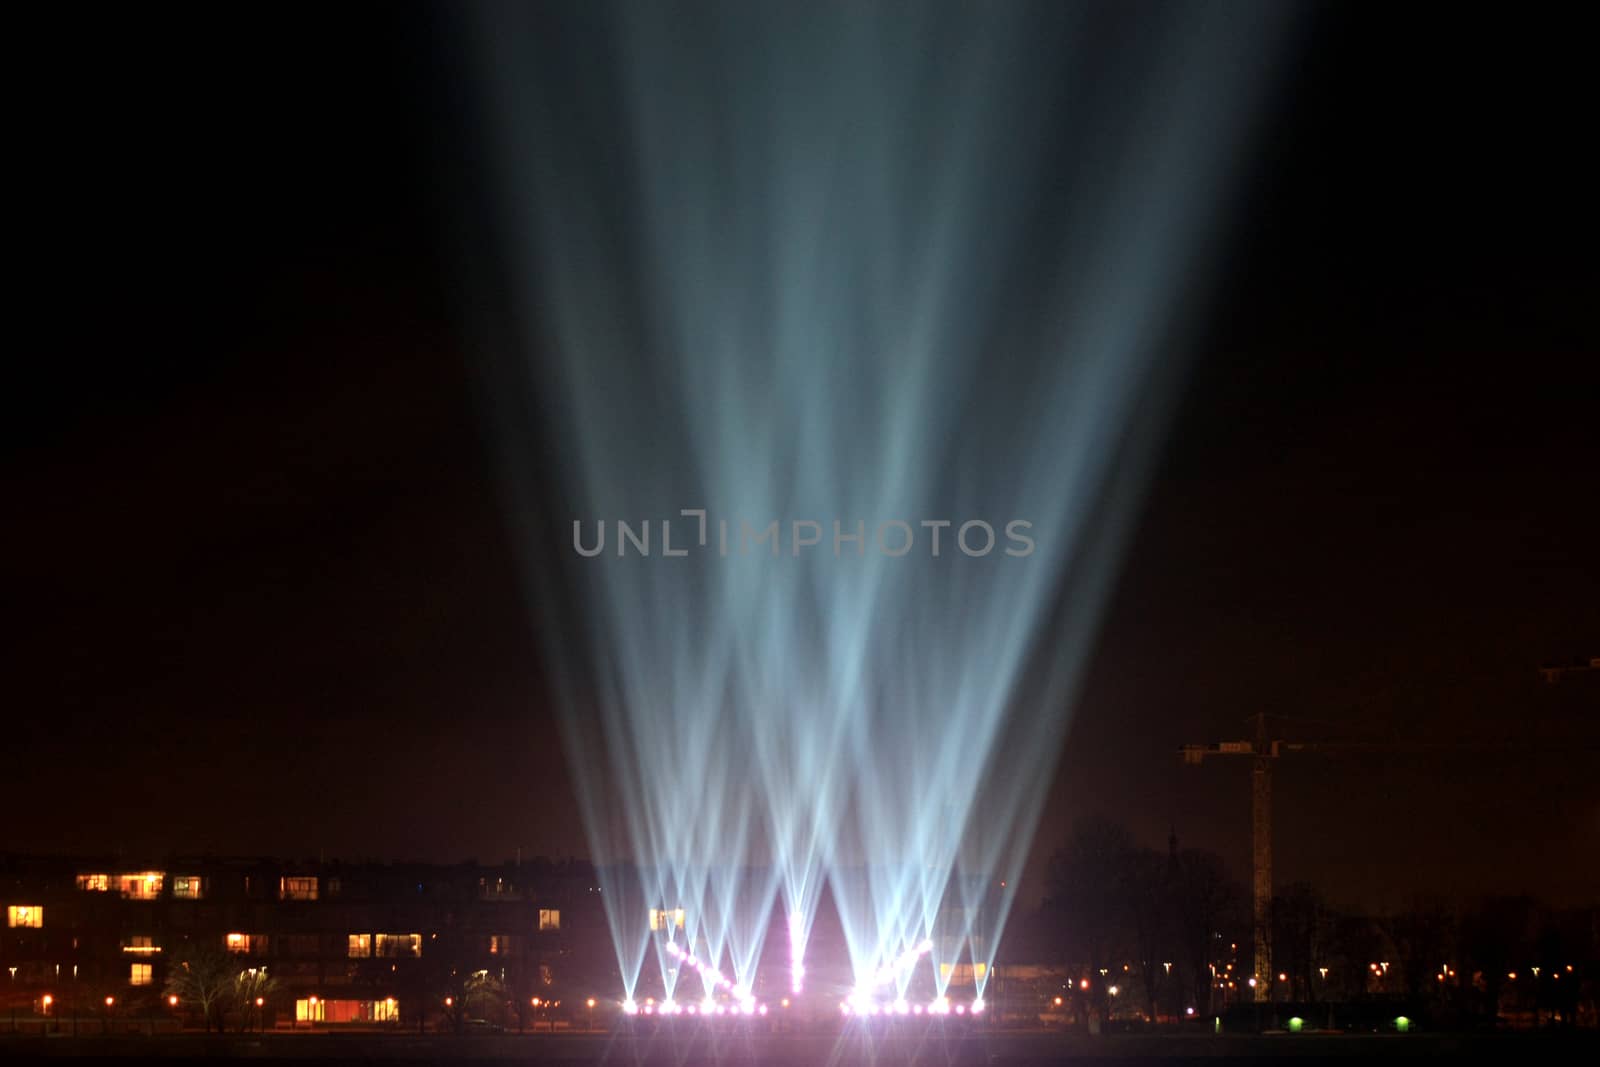 light beams on the city promenade